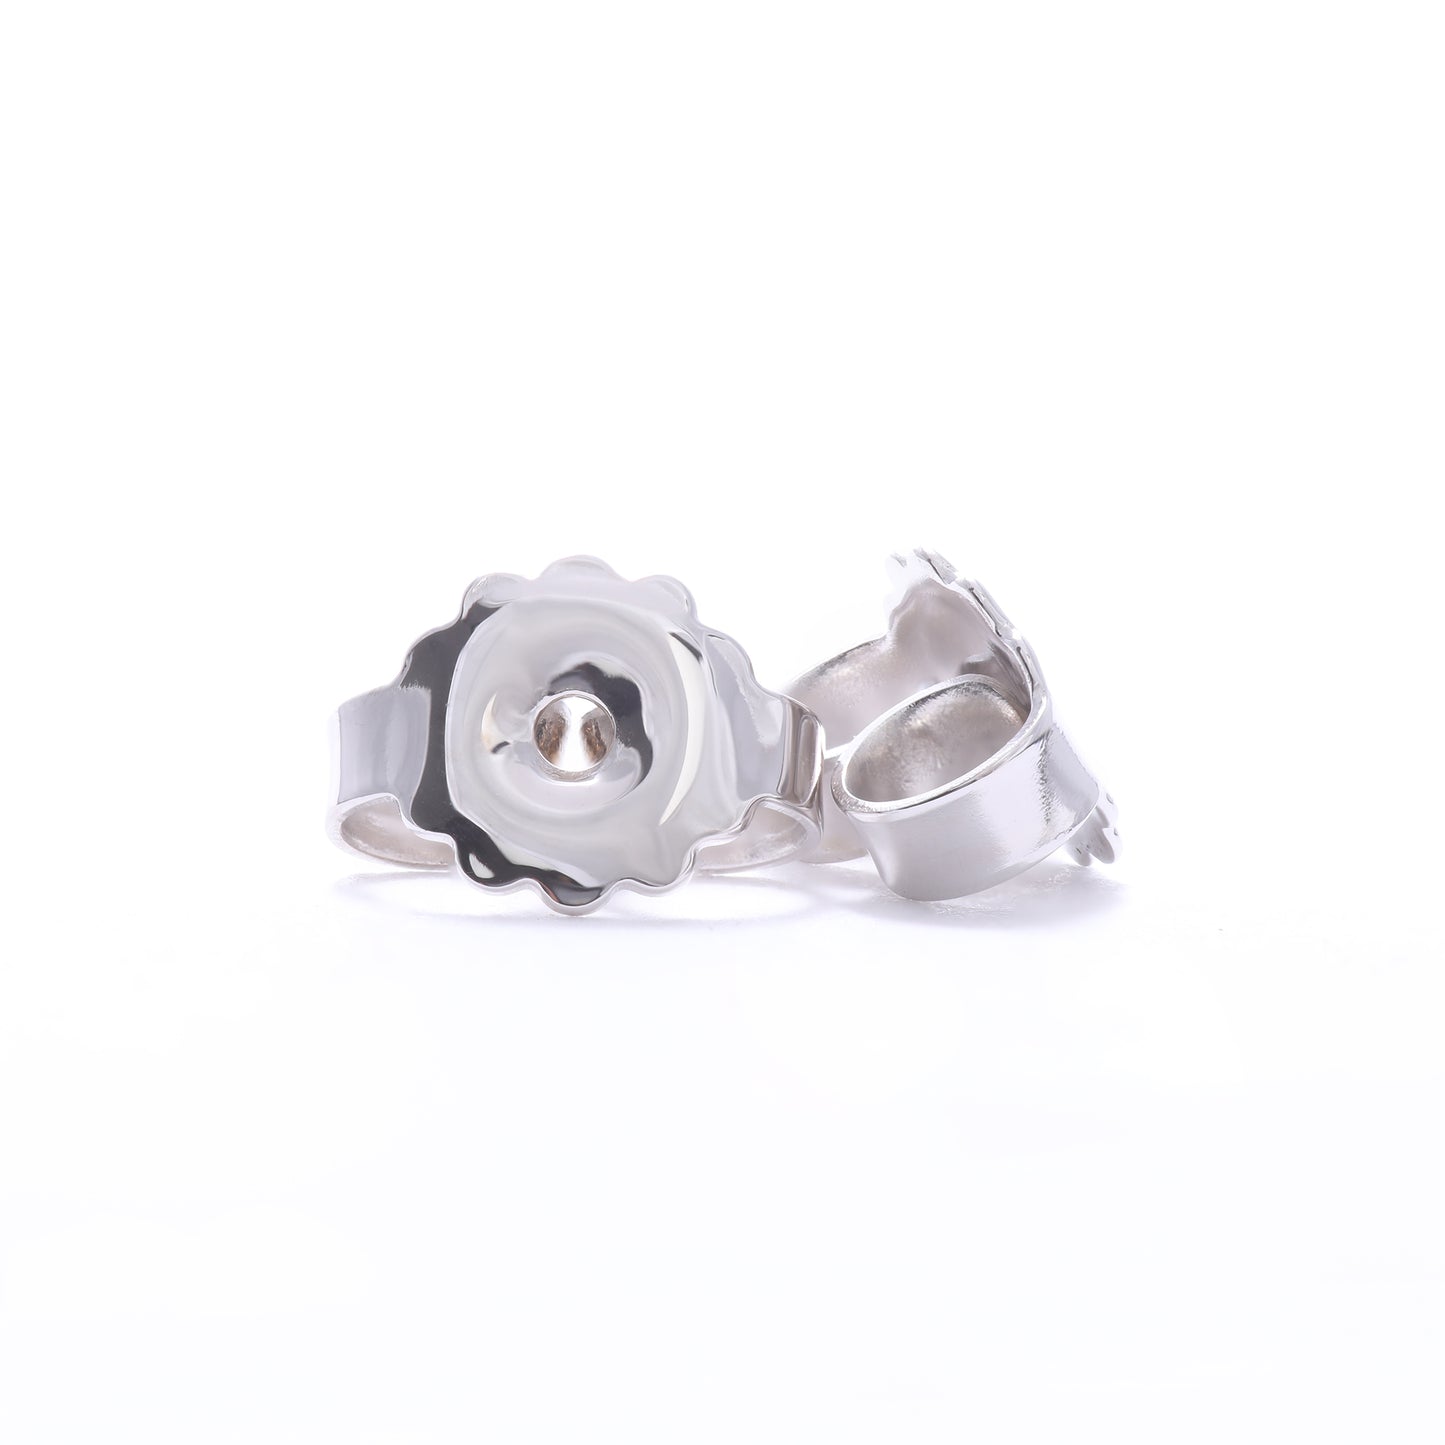 Lab Grown Stud Diamond Earrings 0.50 Total Carat Weight